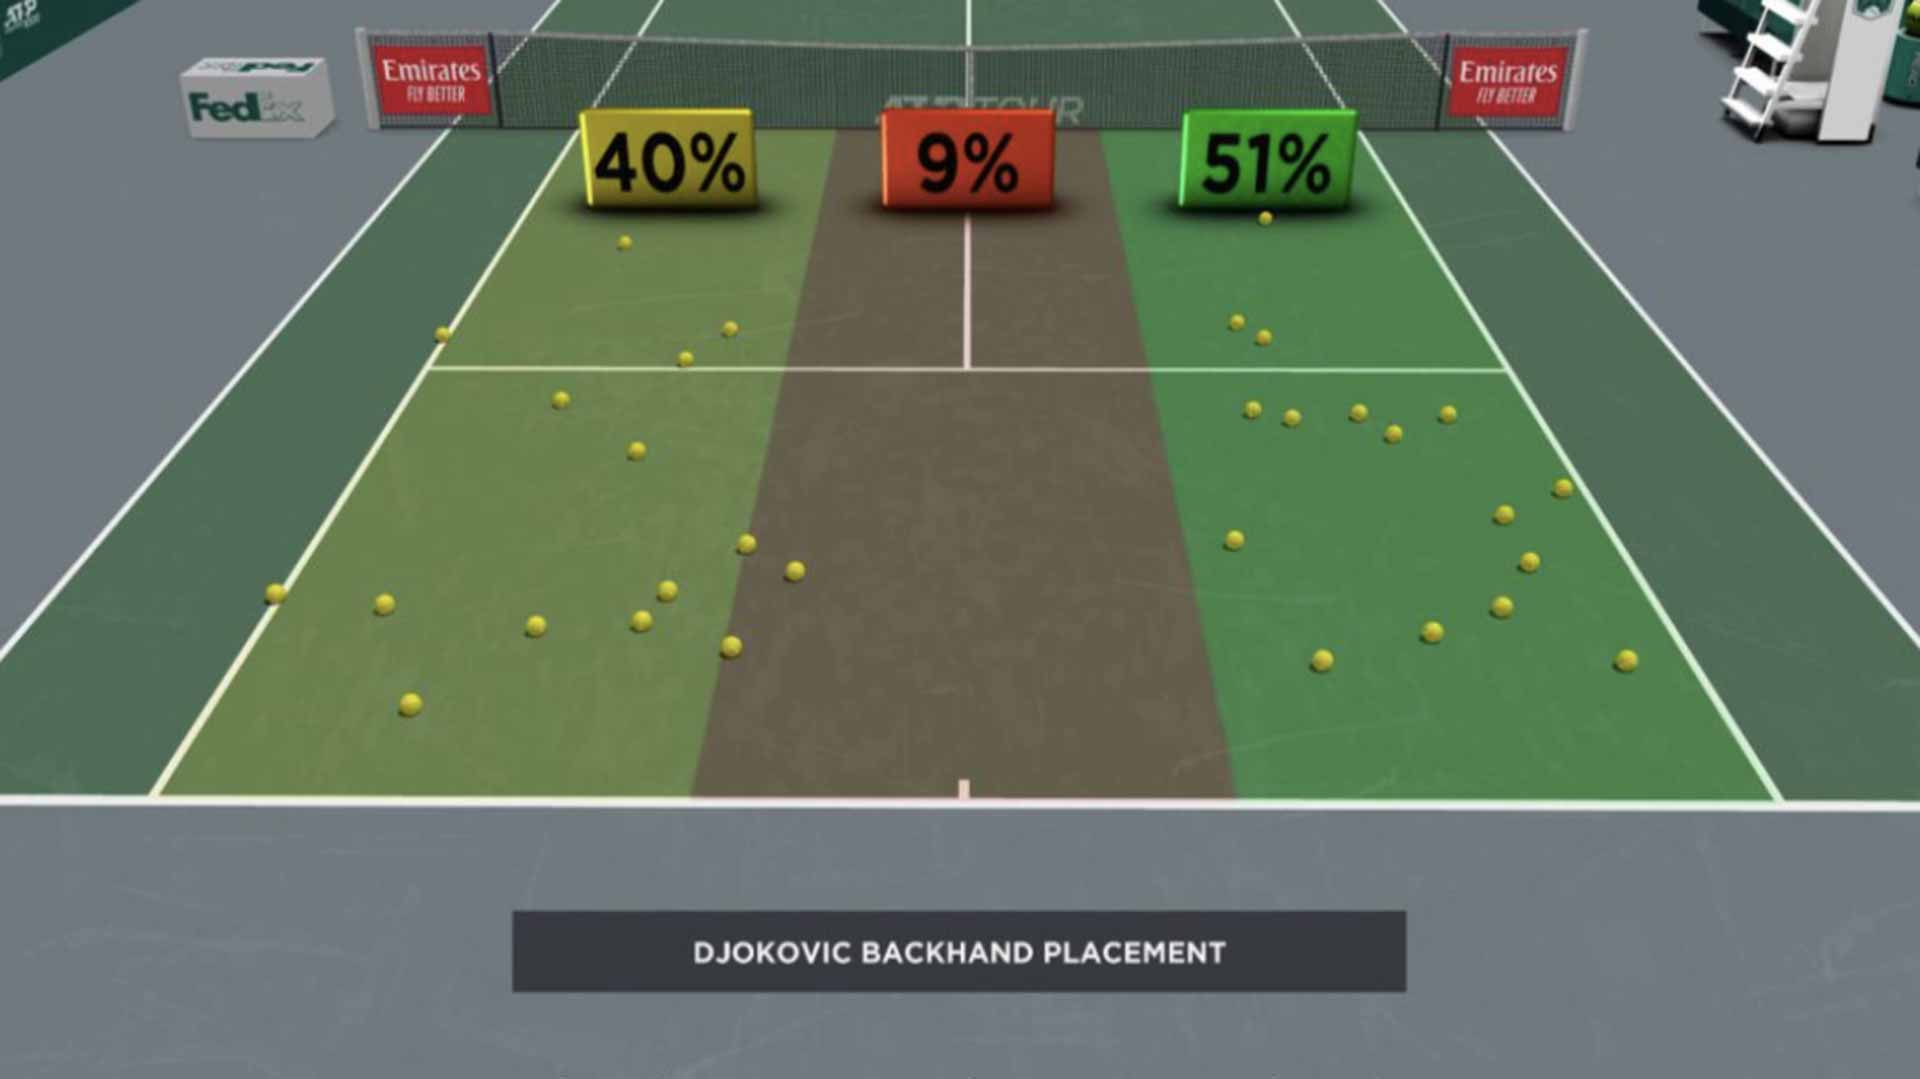 Djokovic Backhand Placement